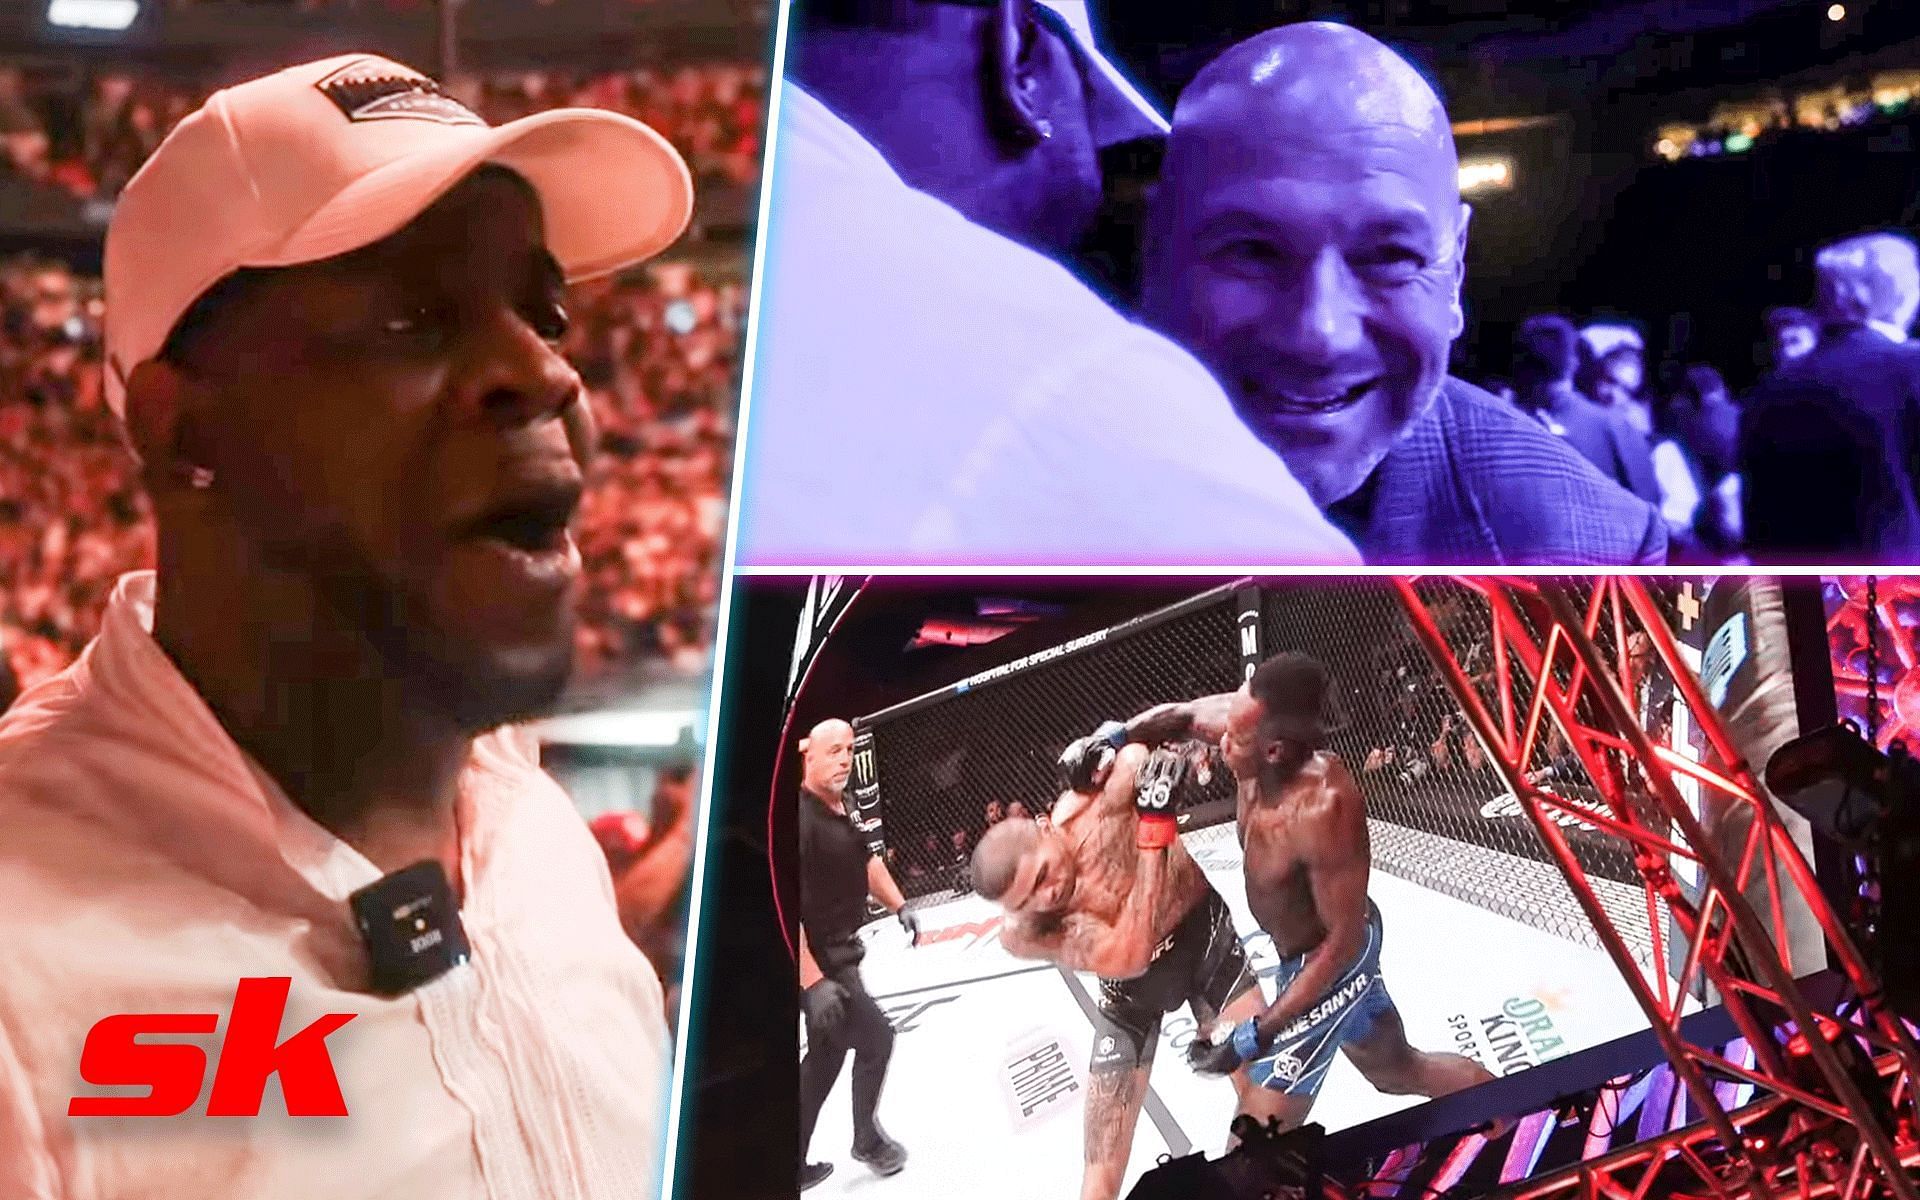 Dana White surprises ER hero with VIP passes to UFC 287 [Image credits: TorchPro on YouTube]